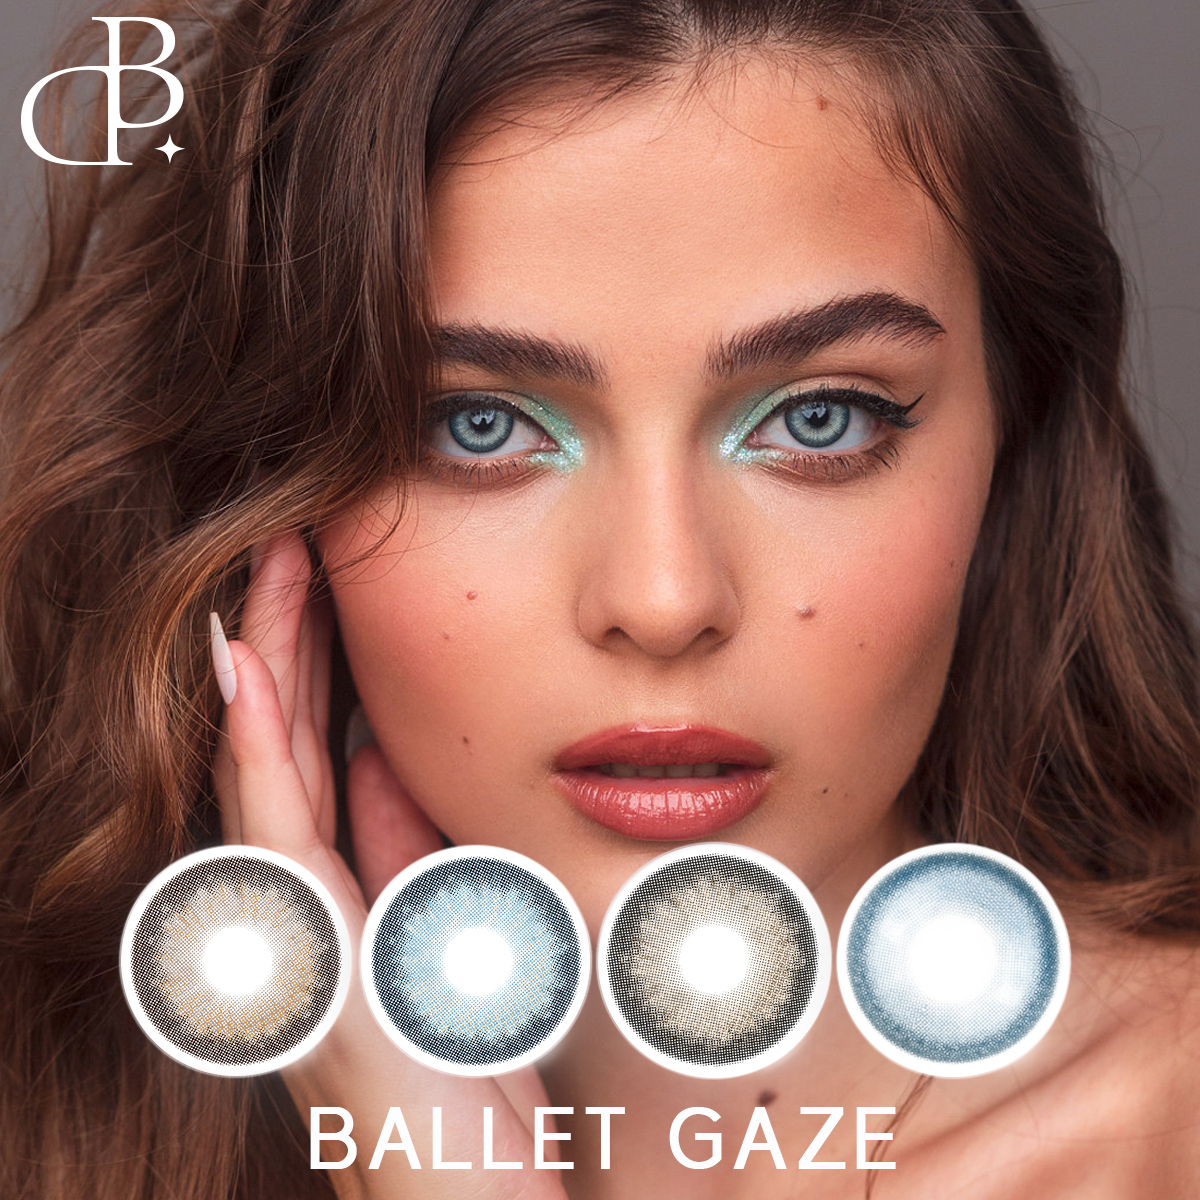 BALET GAZE priroda Clear Soft Contact Lenses kozmetička veleprodaja kontaktnih leća u boji bez recepta